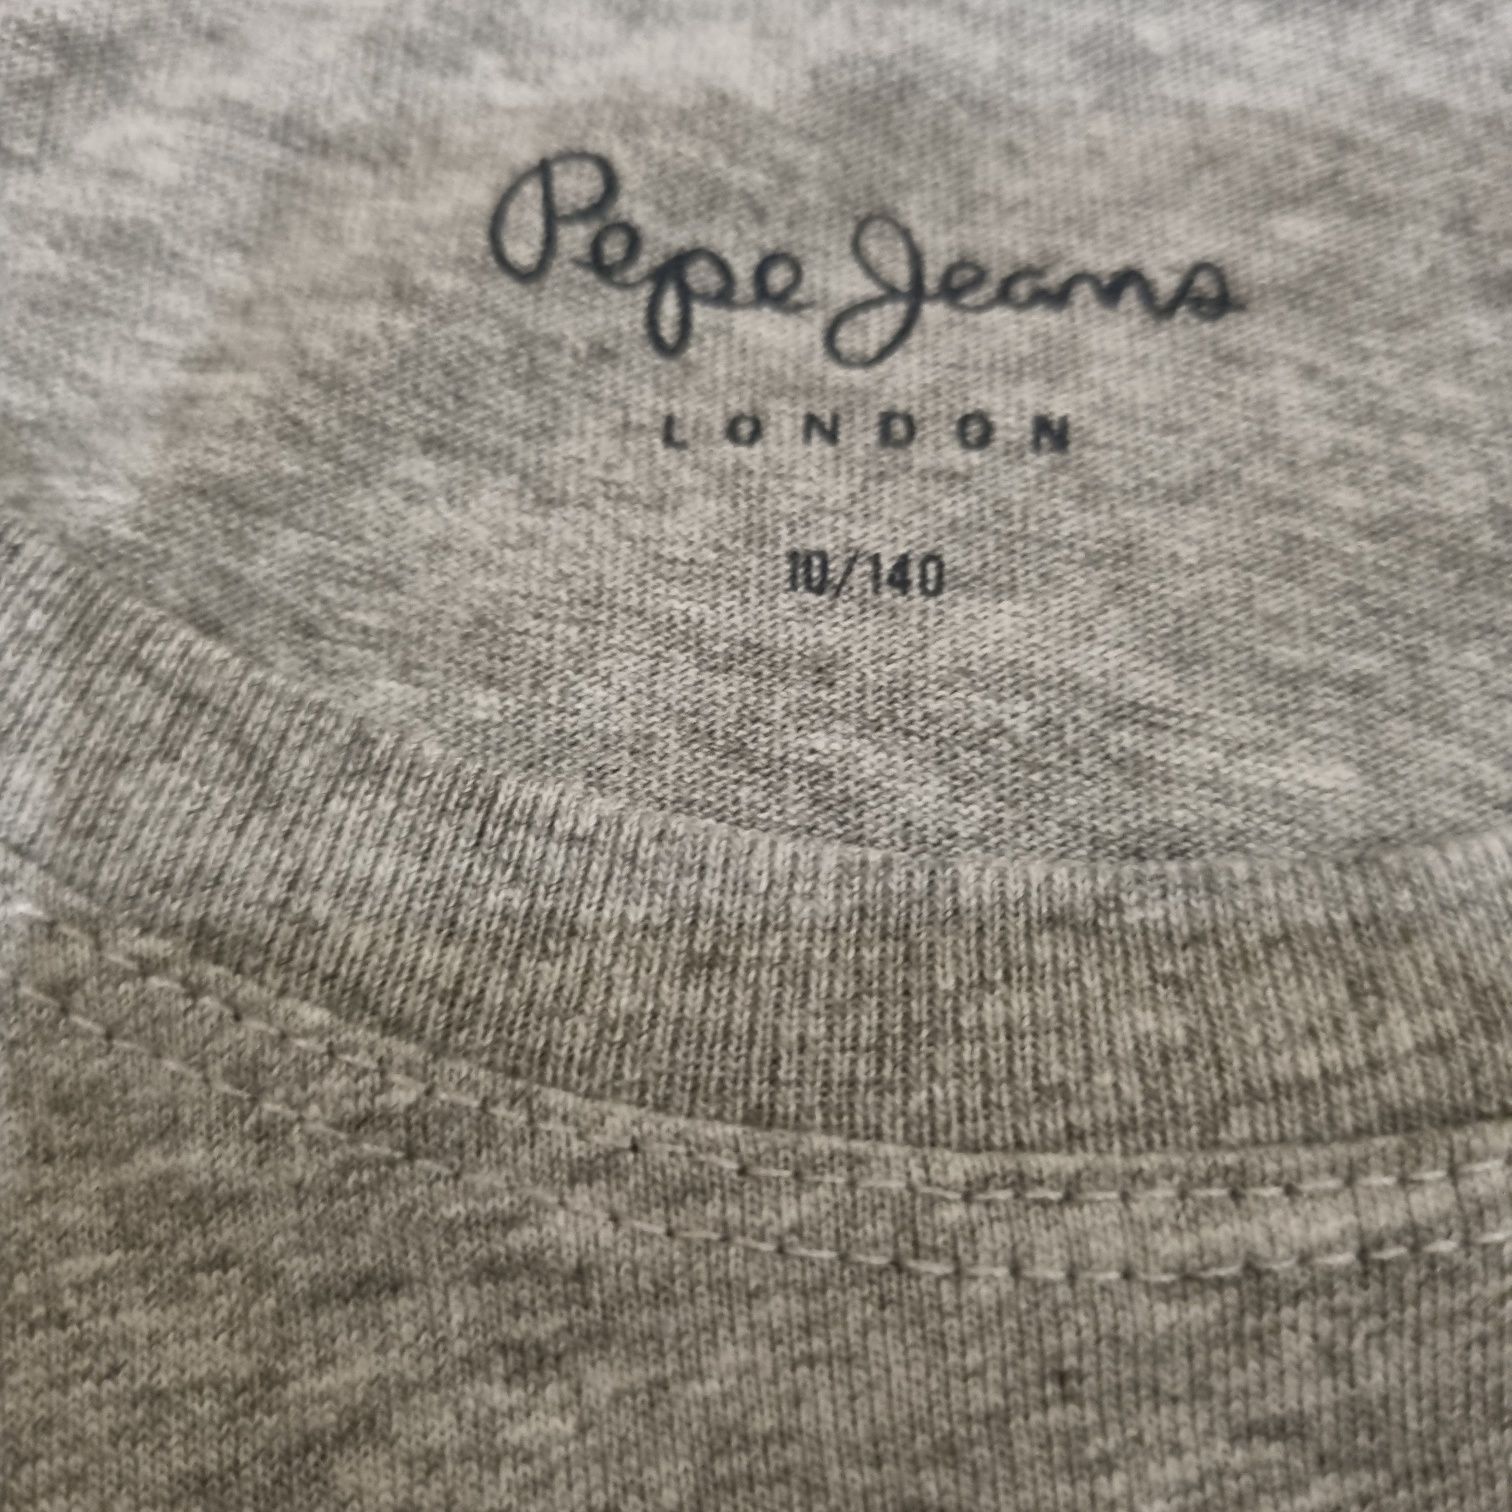 Sweatshirt Pepe Jeans